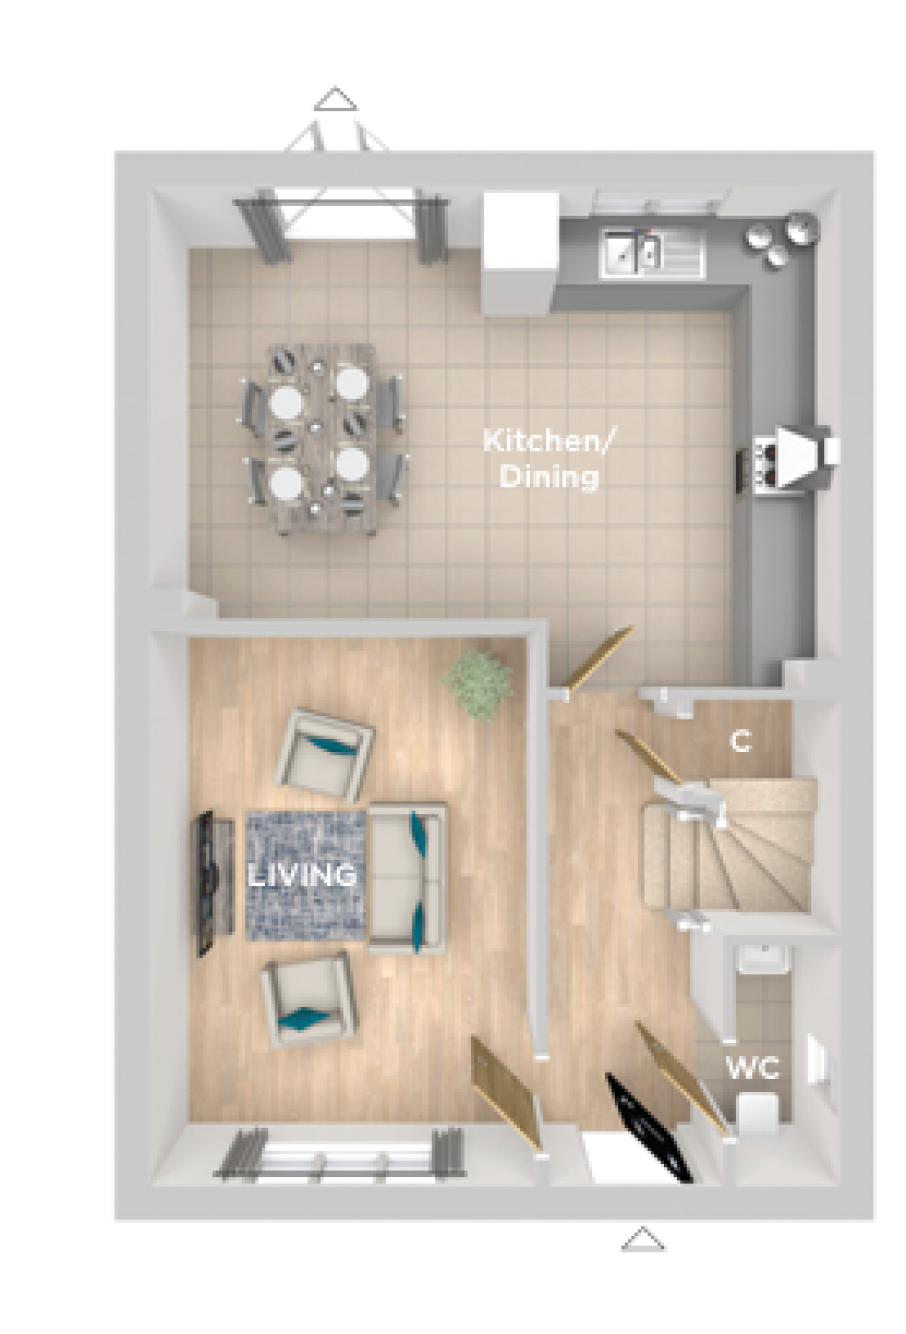 Ground Floor Plan for The Mylne